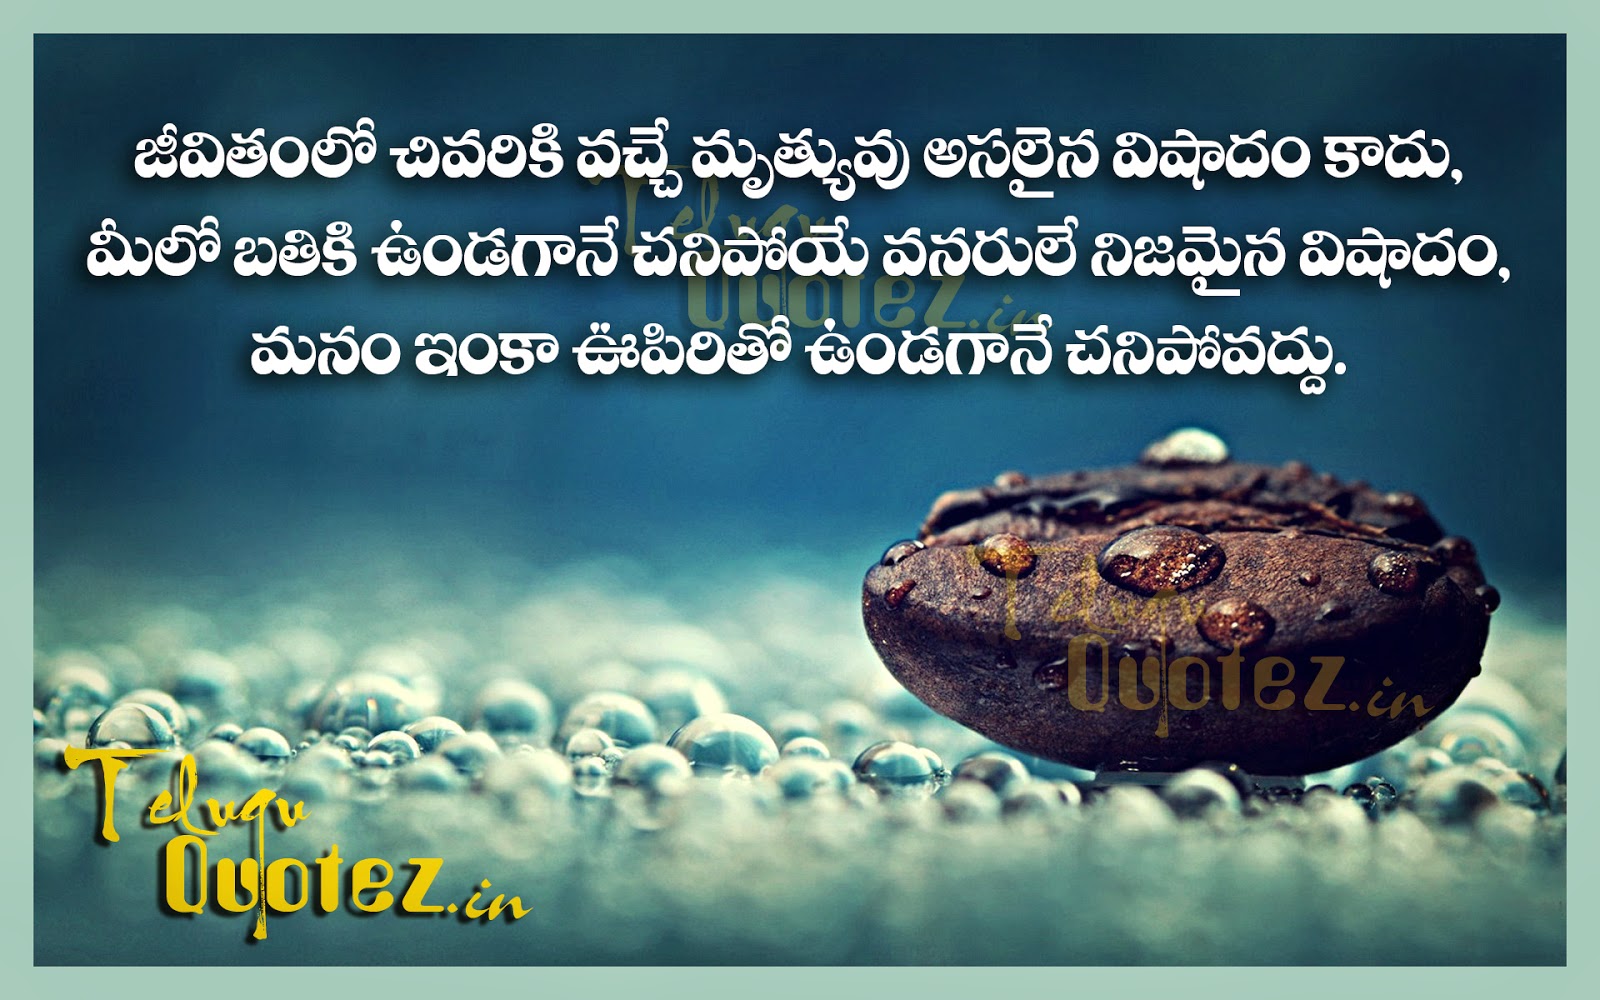 Telugu Quotes on life | naveengfx